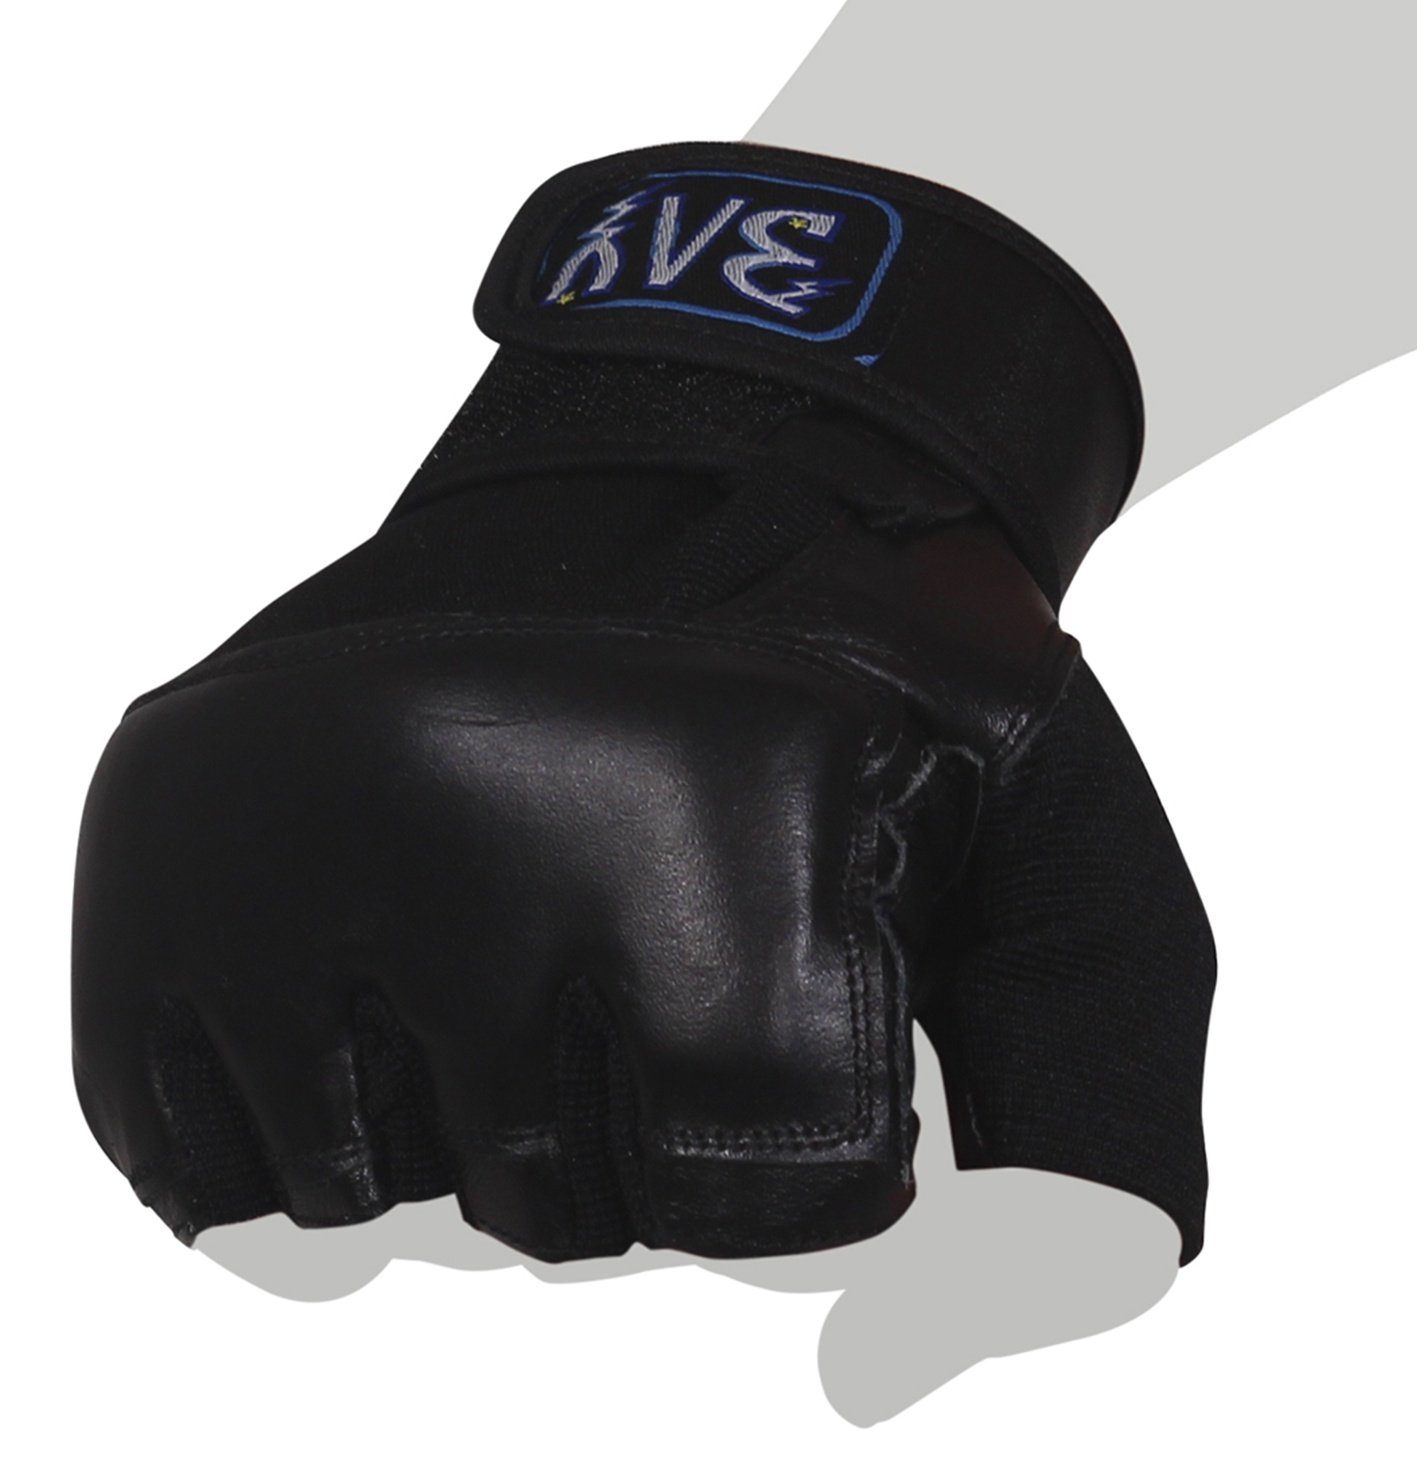 schwarz, BAY-Sports S Leder, Boxsack Sandsack - Boxhandschuhe Sandsackhandschuhe robust, Handschutz Orbit sehr XL